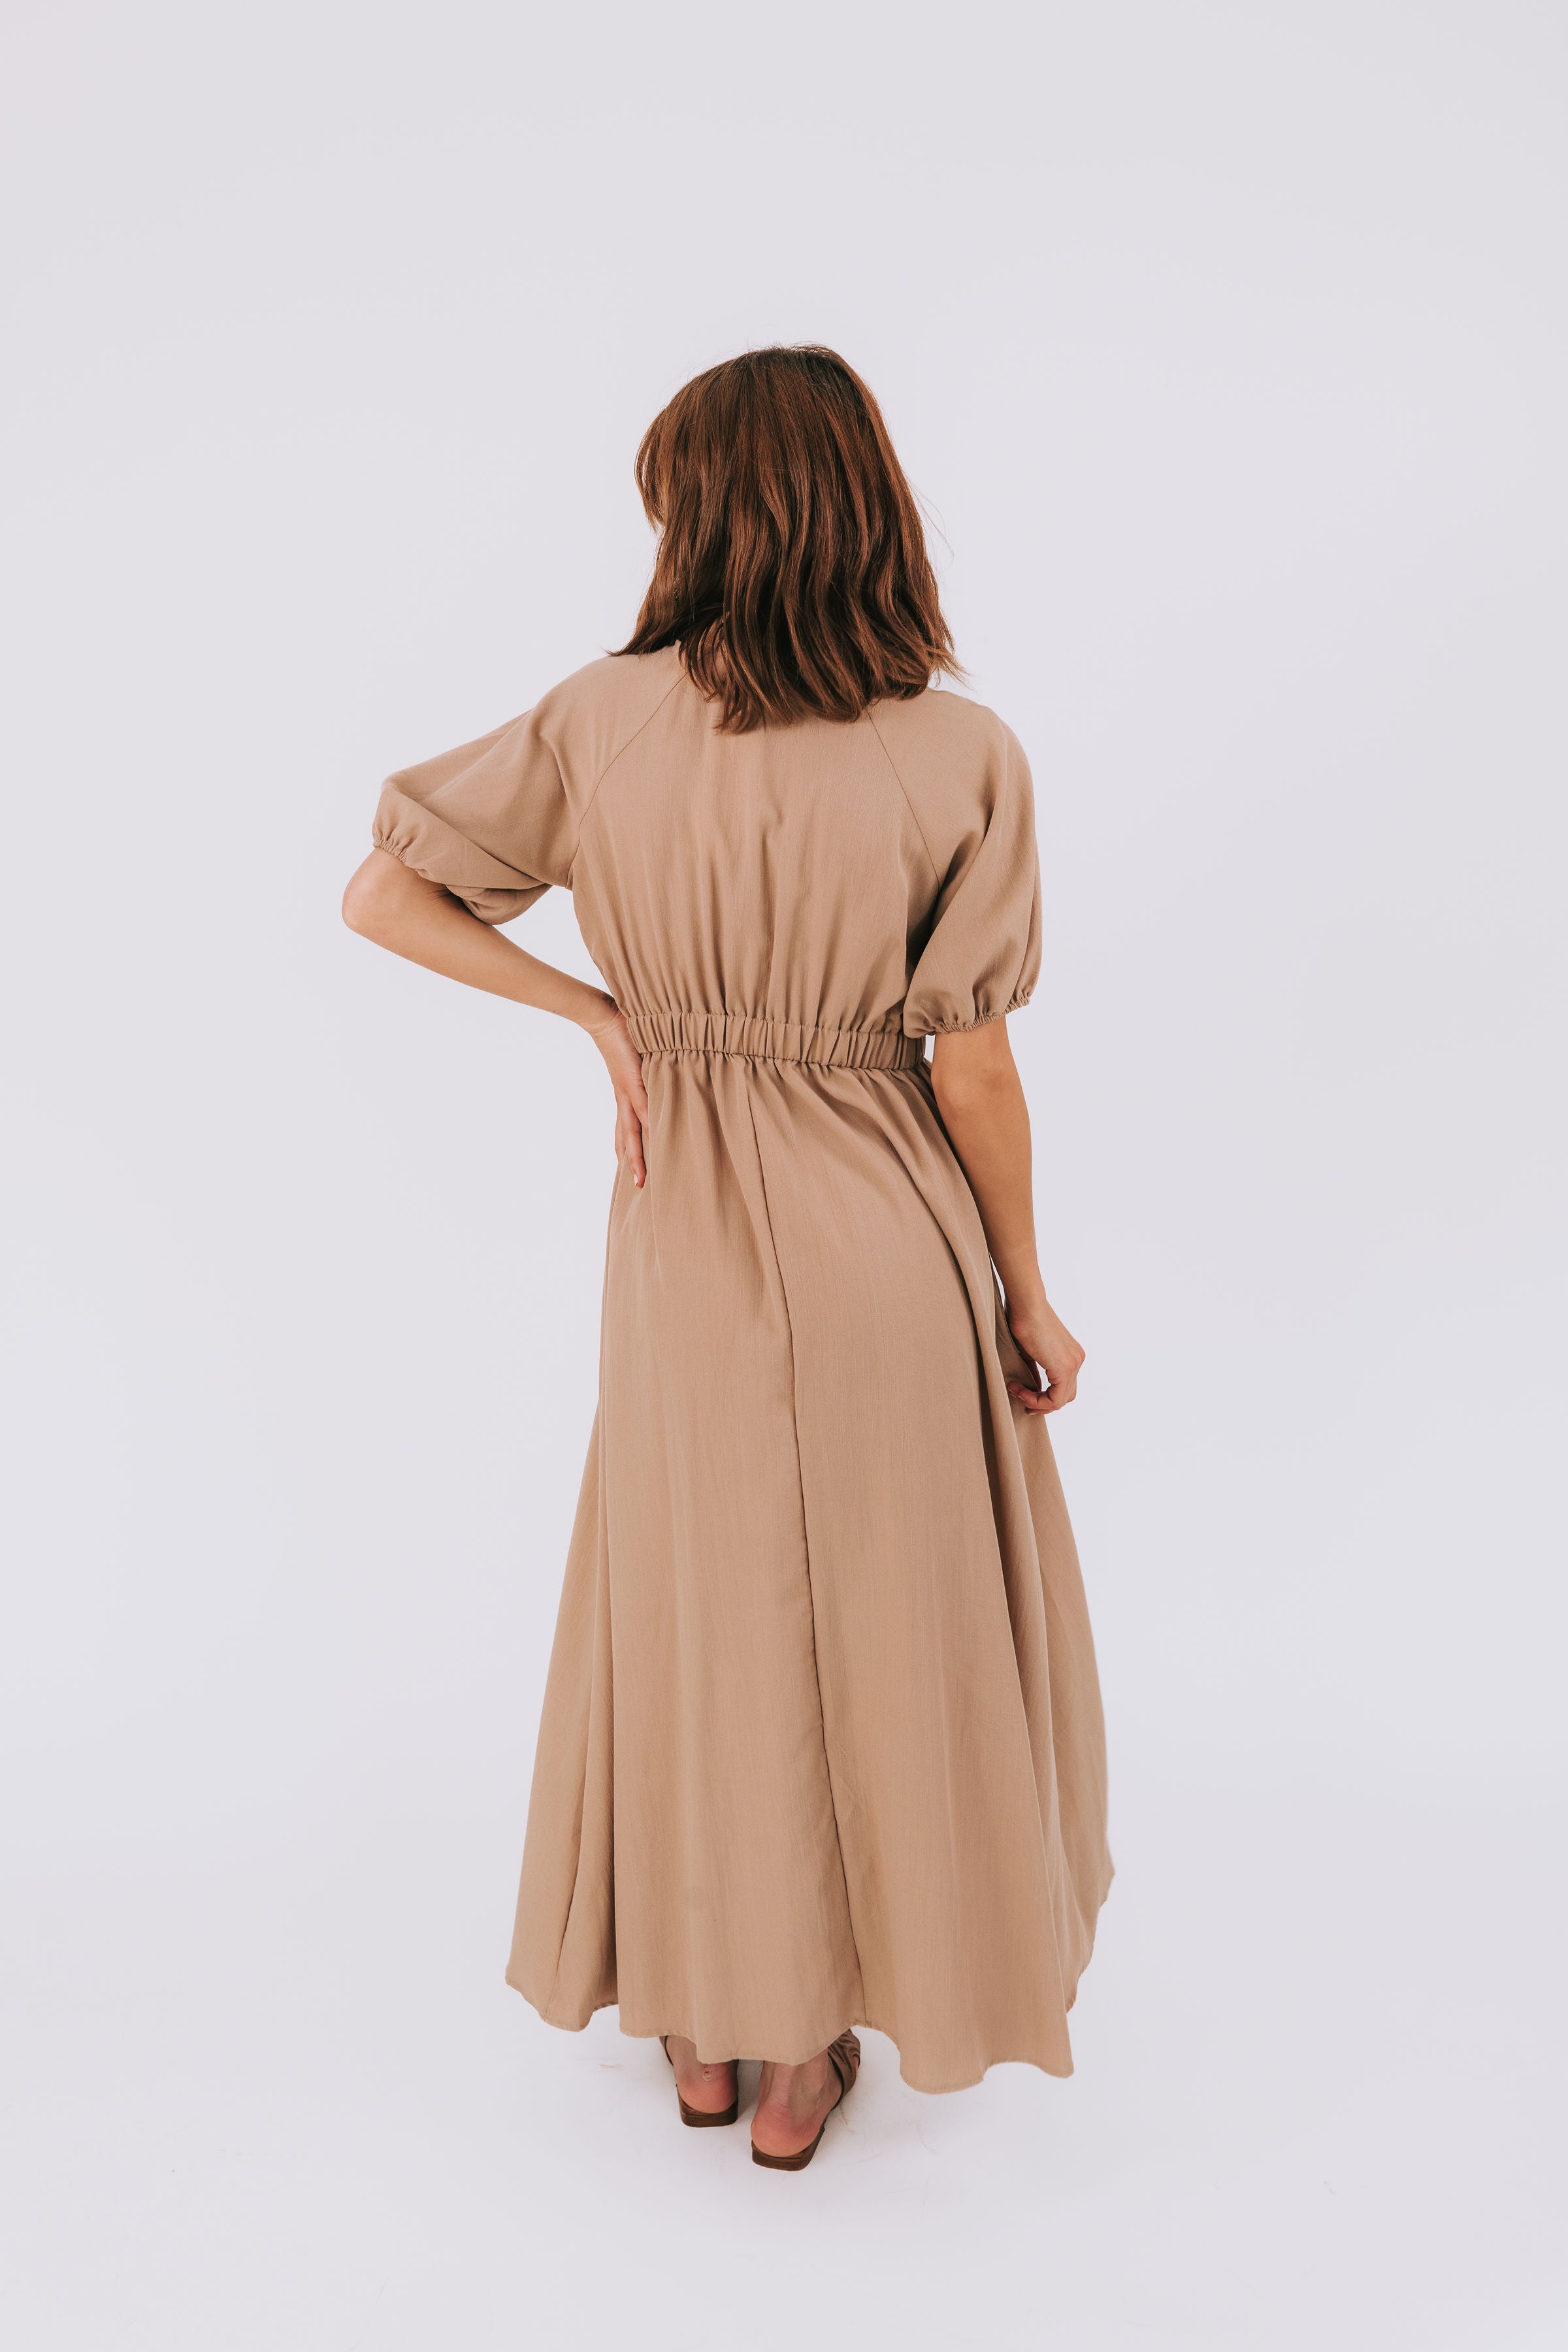 Sandstorm Style Dress